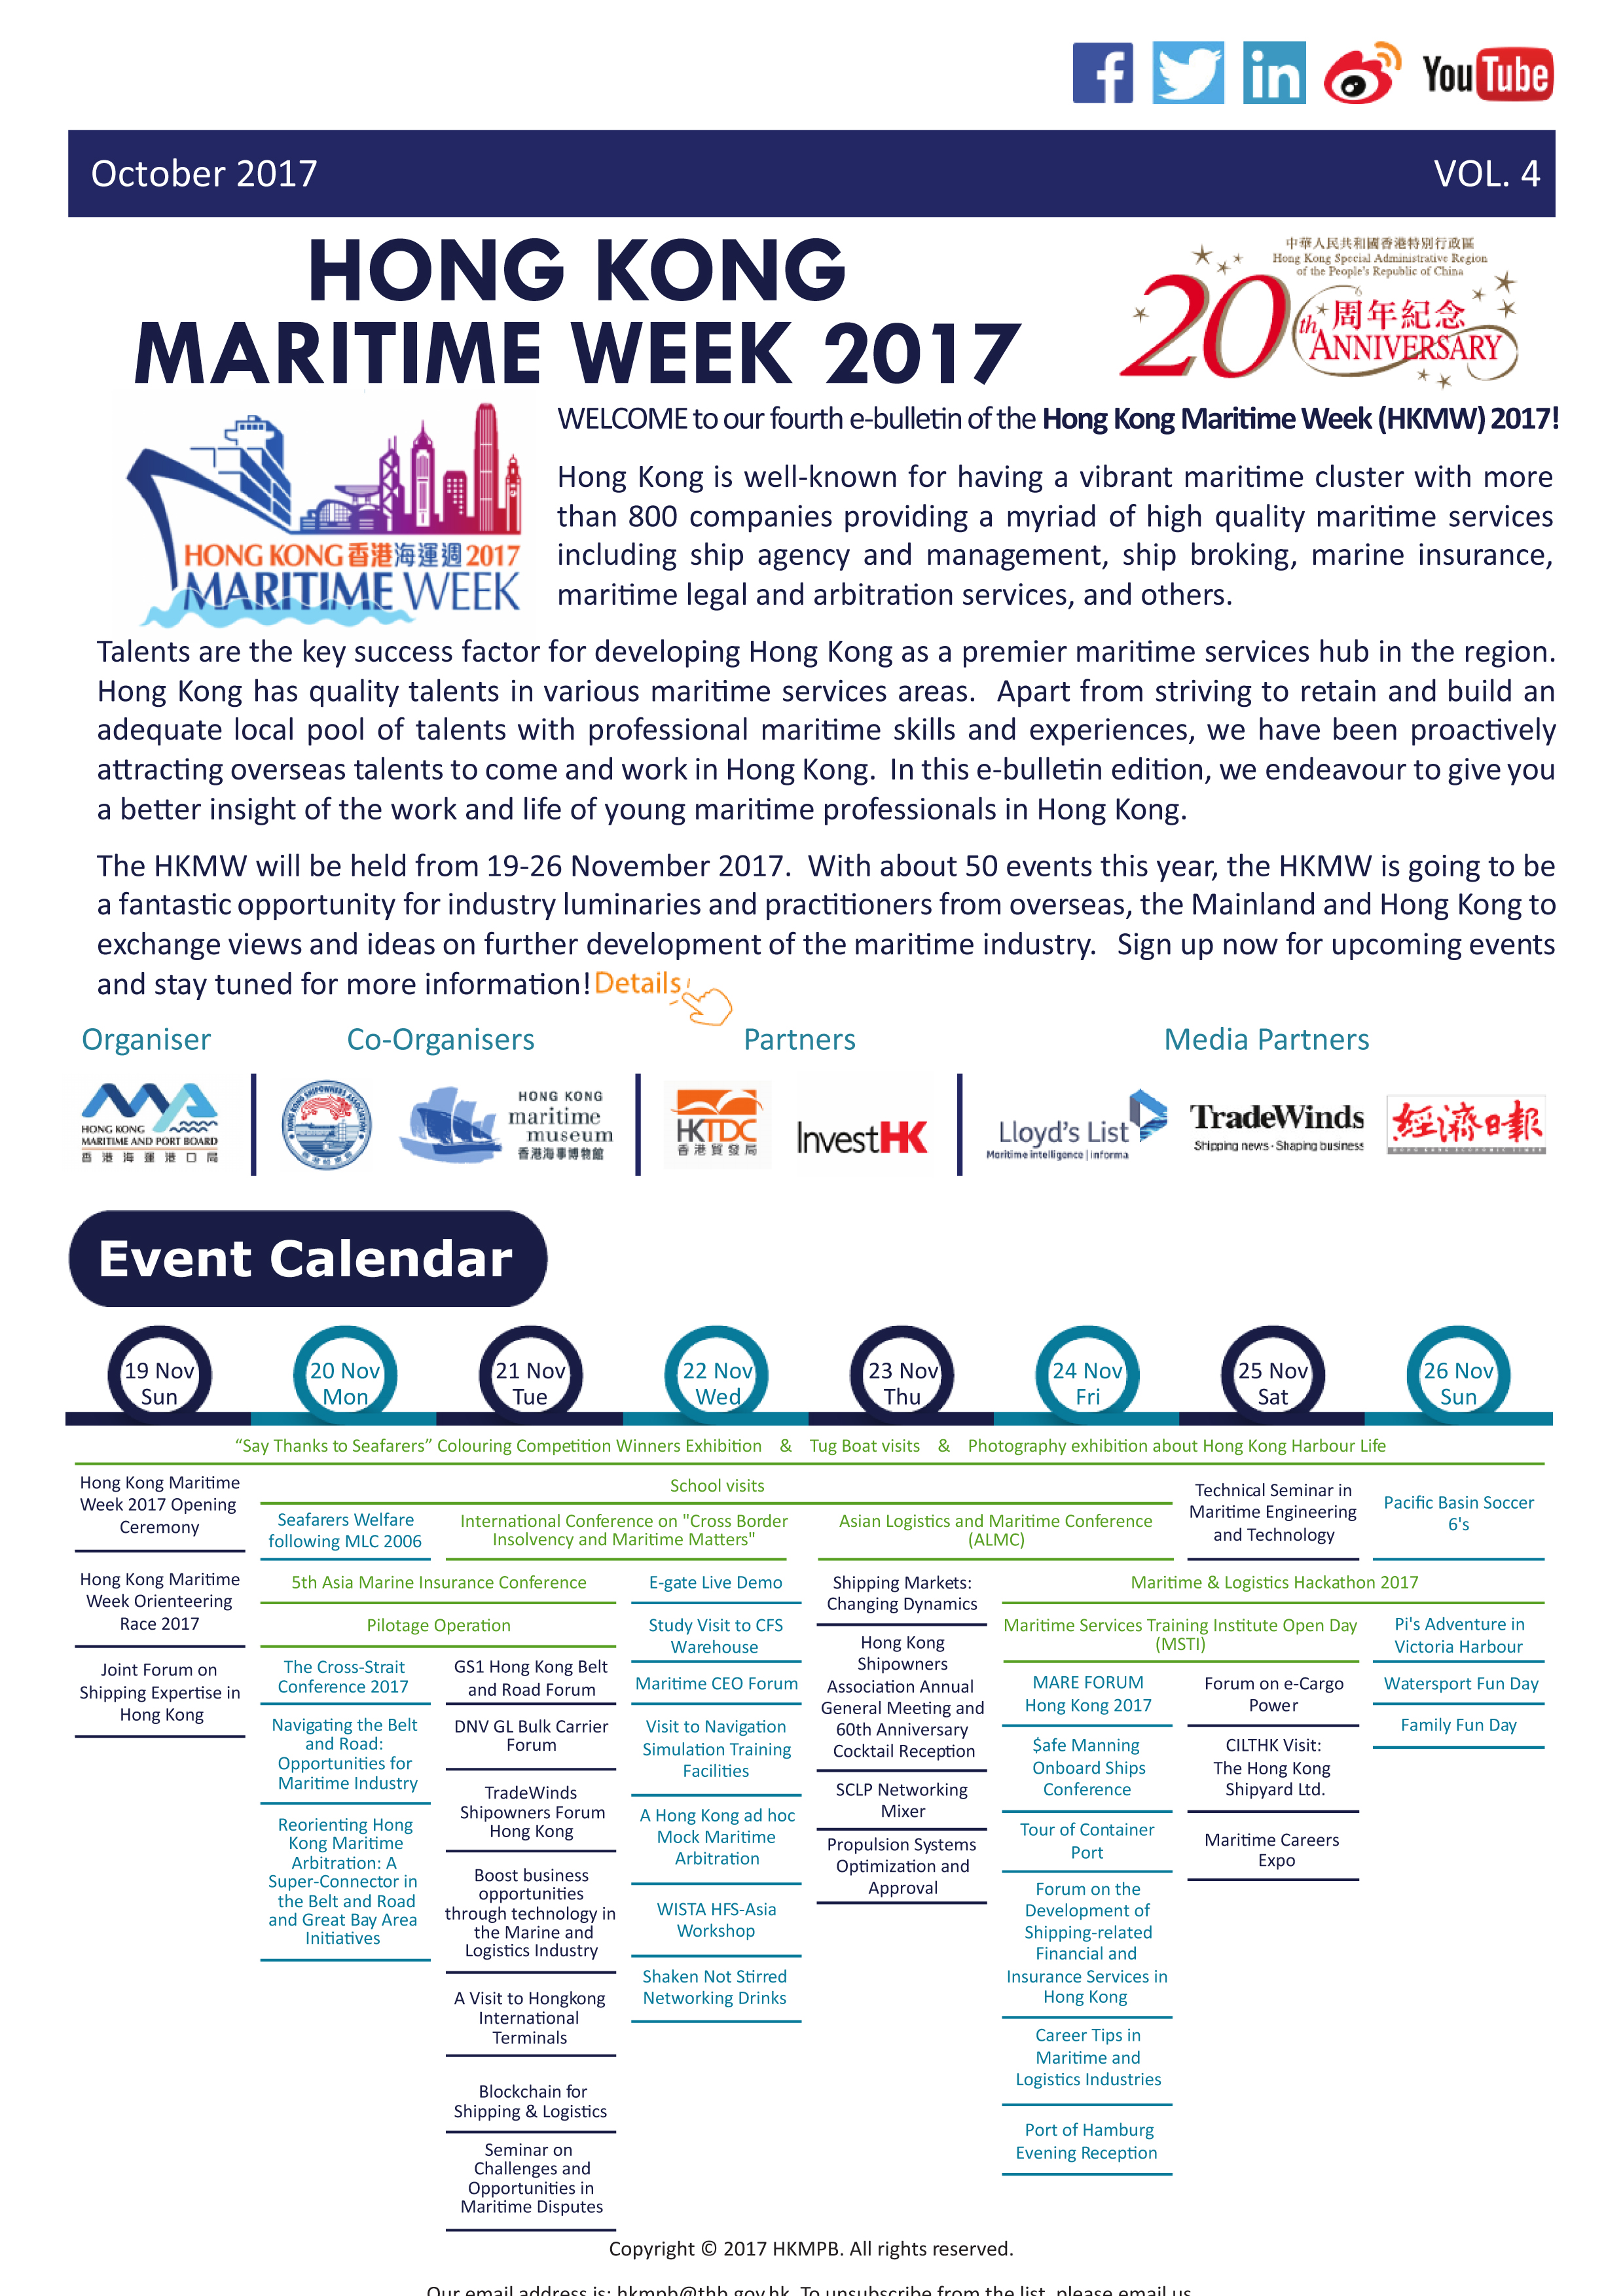 Hong Kong Maritime Week 2017 E-Bulletin No. 4